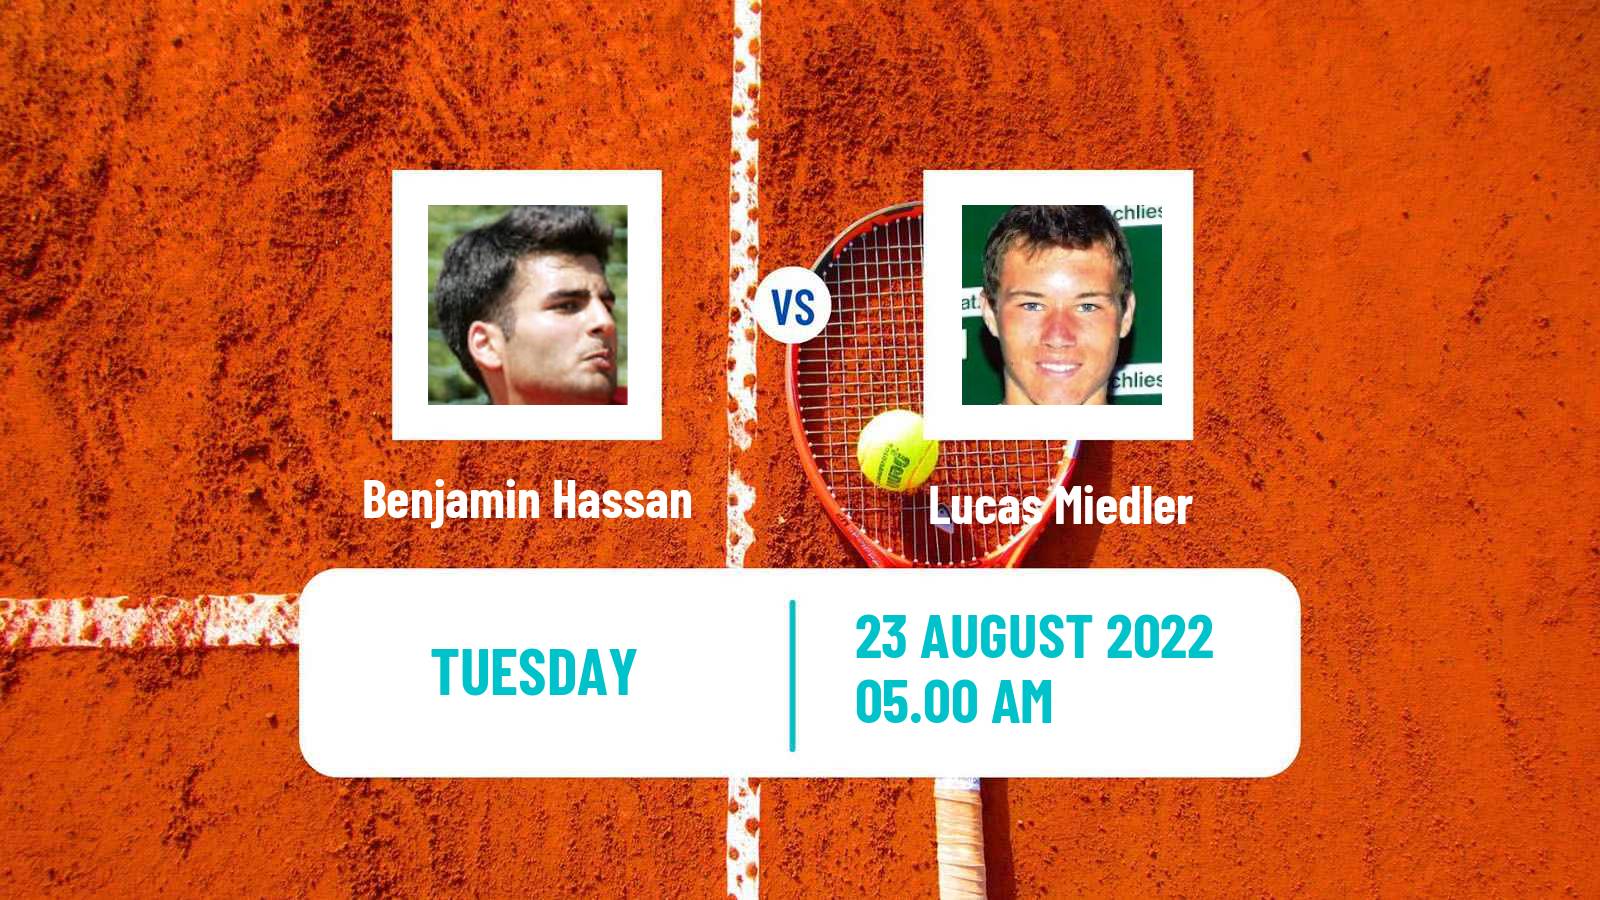 Tennis ATP Challenger Benjamin Hassan - Lucas Miedler